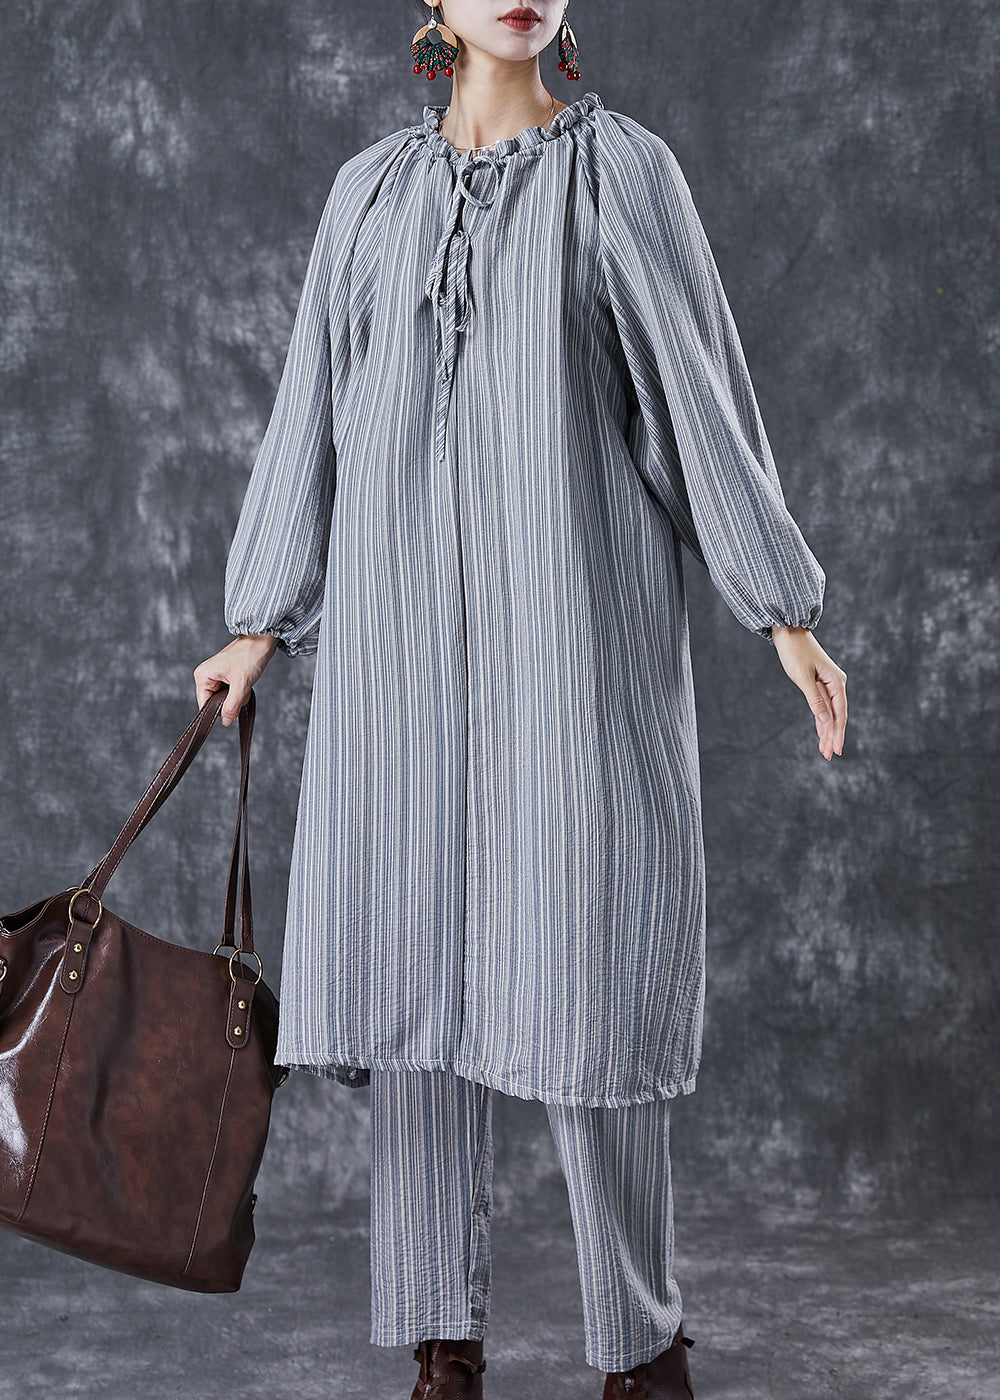 Organic Grey Ruffled Striped Cotton Dress Two Piece Suit Set Fall